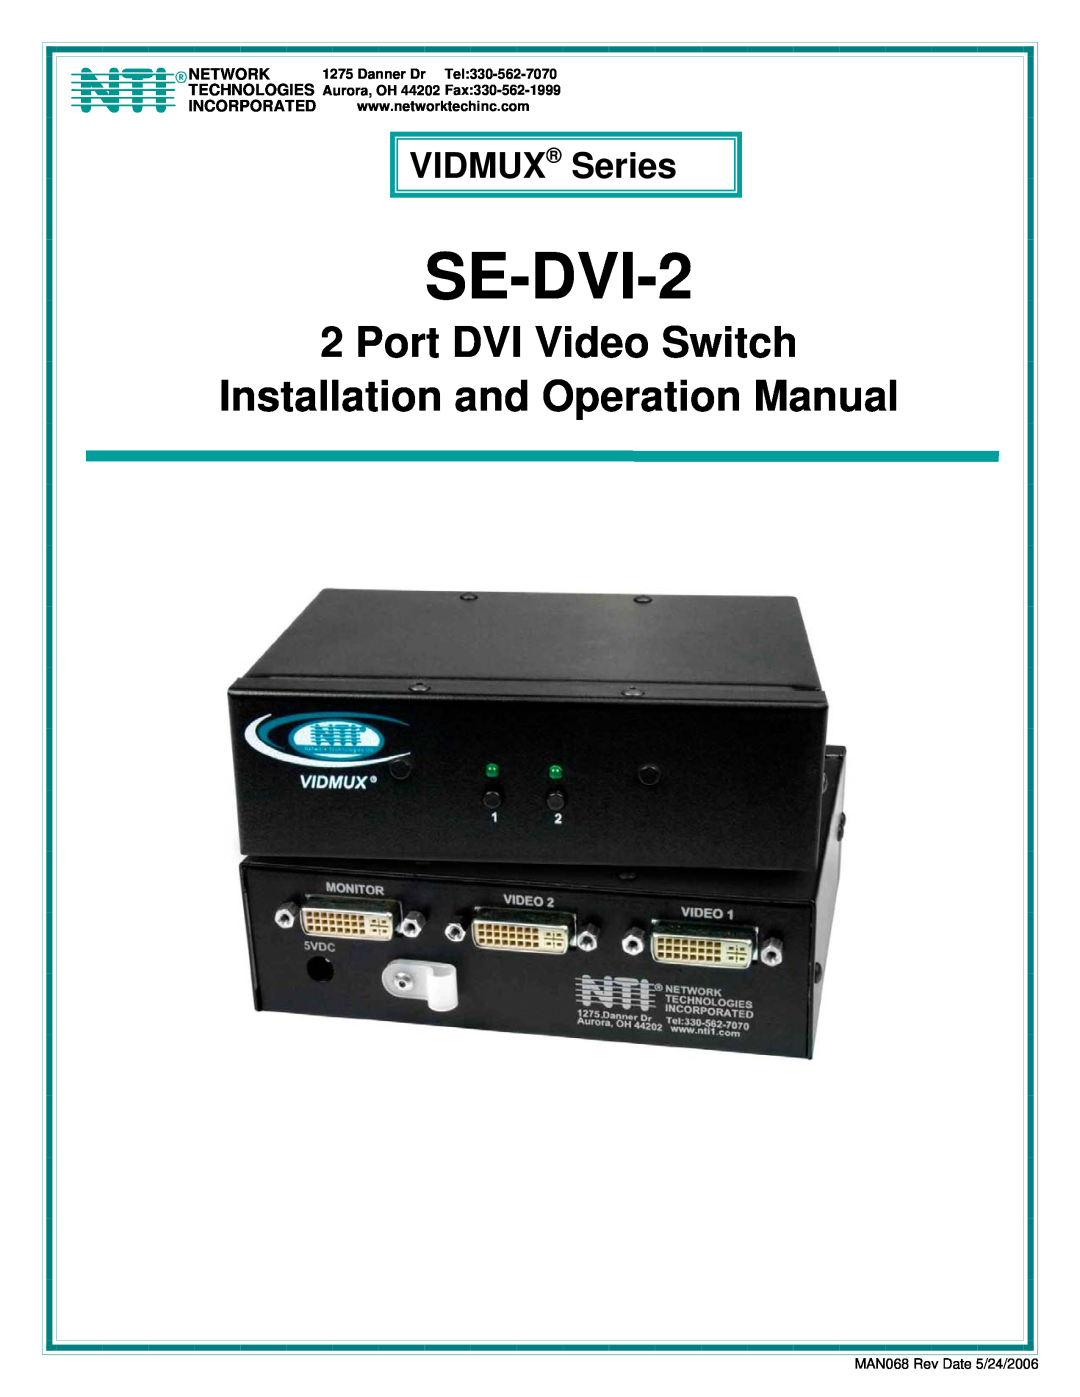 Network Technologies SE-DVI-2 operation manual VIDMUX Series, R Network, Incorporated, Port DVI Video Switch 